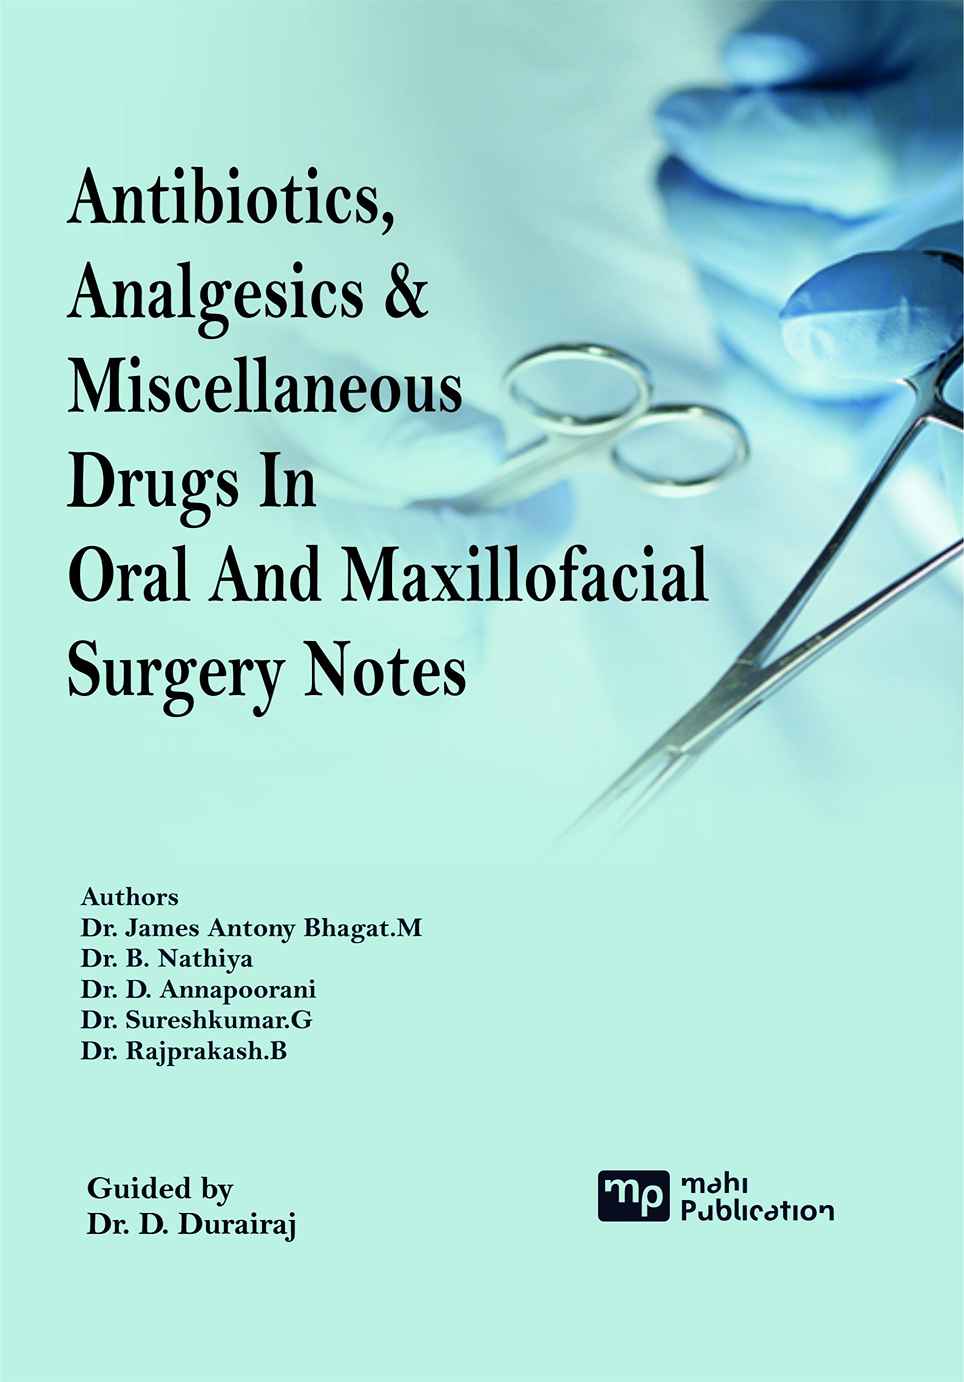 Antibiotics, Analgesics & Miscellaneous Drugs in Oral and Maxillofacial Surgery Notes